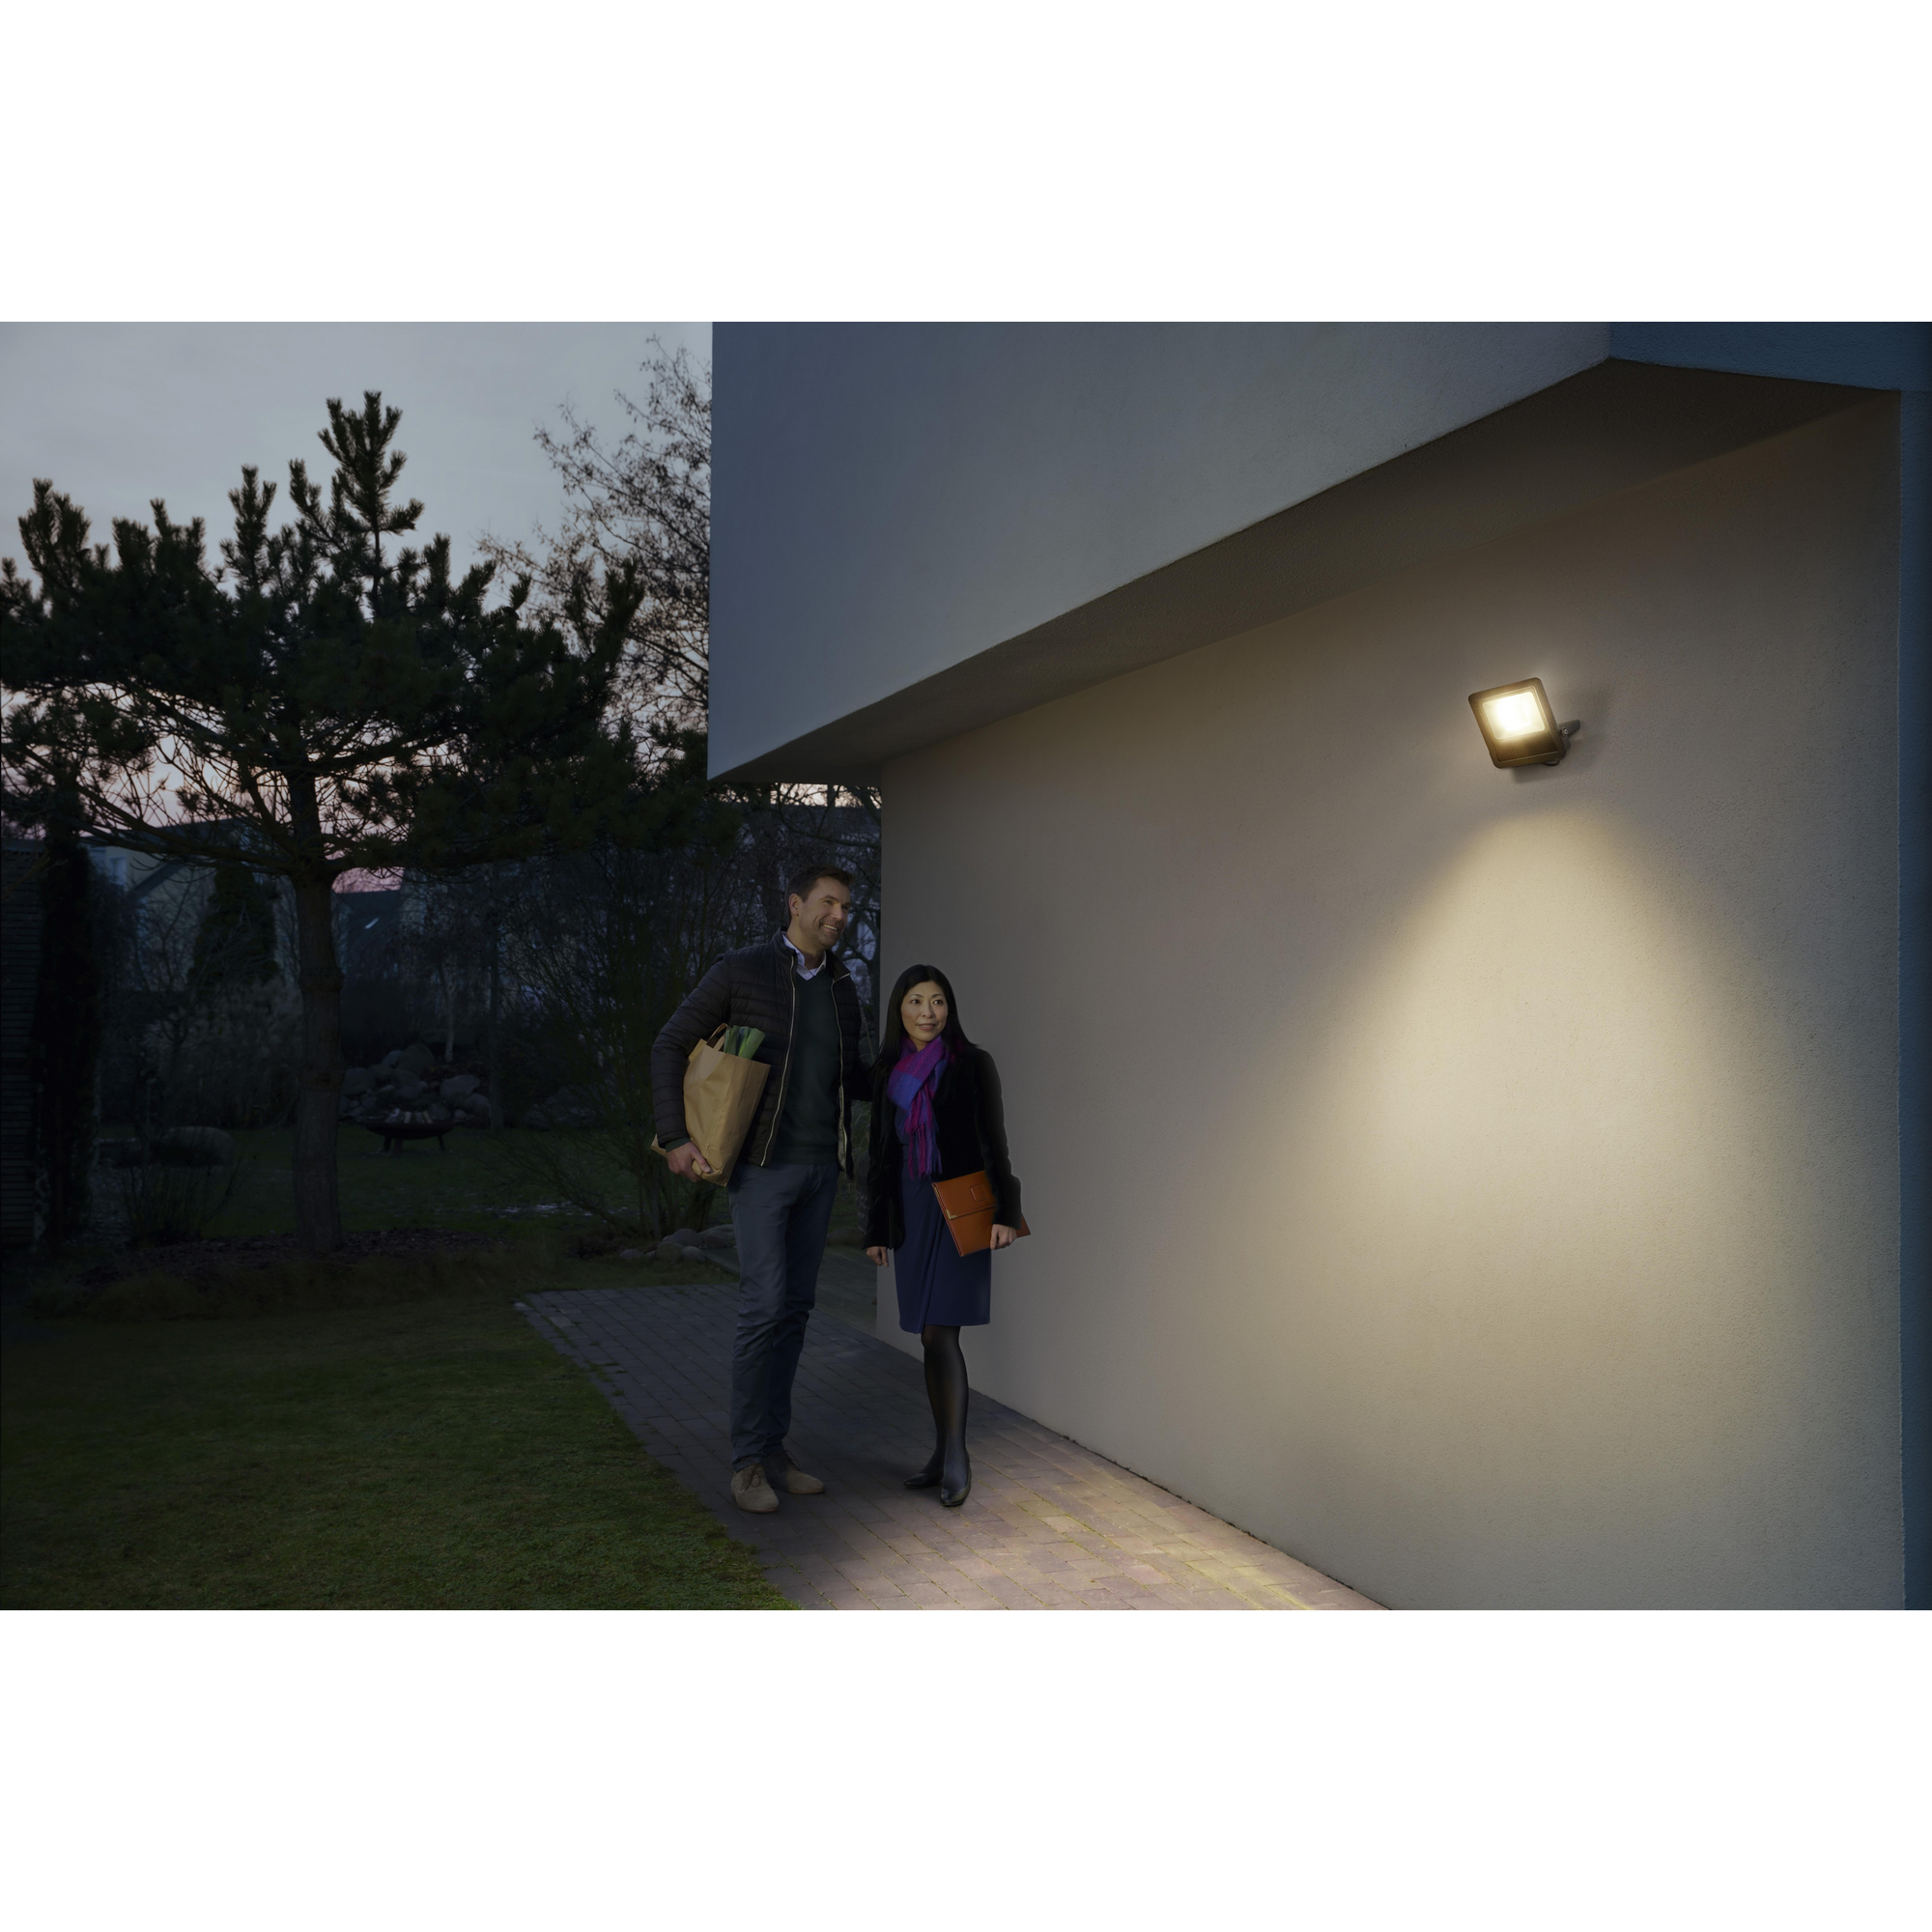 LED-Außenfluter 'Smart+' 20,9 x 16,8 cm dunkelgrau 2190 lm 30 W WLAN + product picture